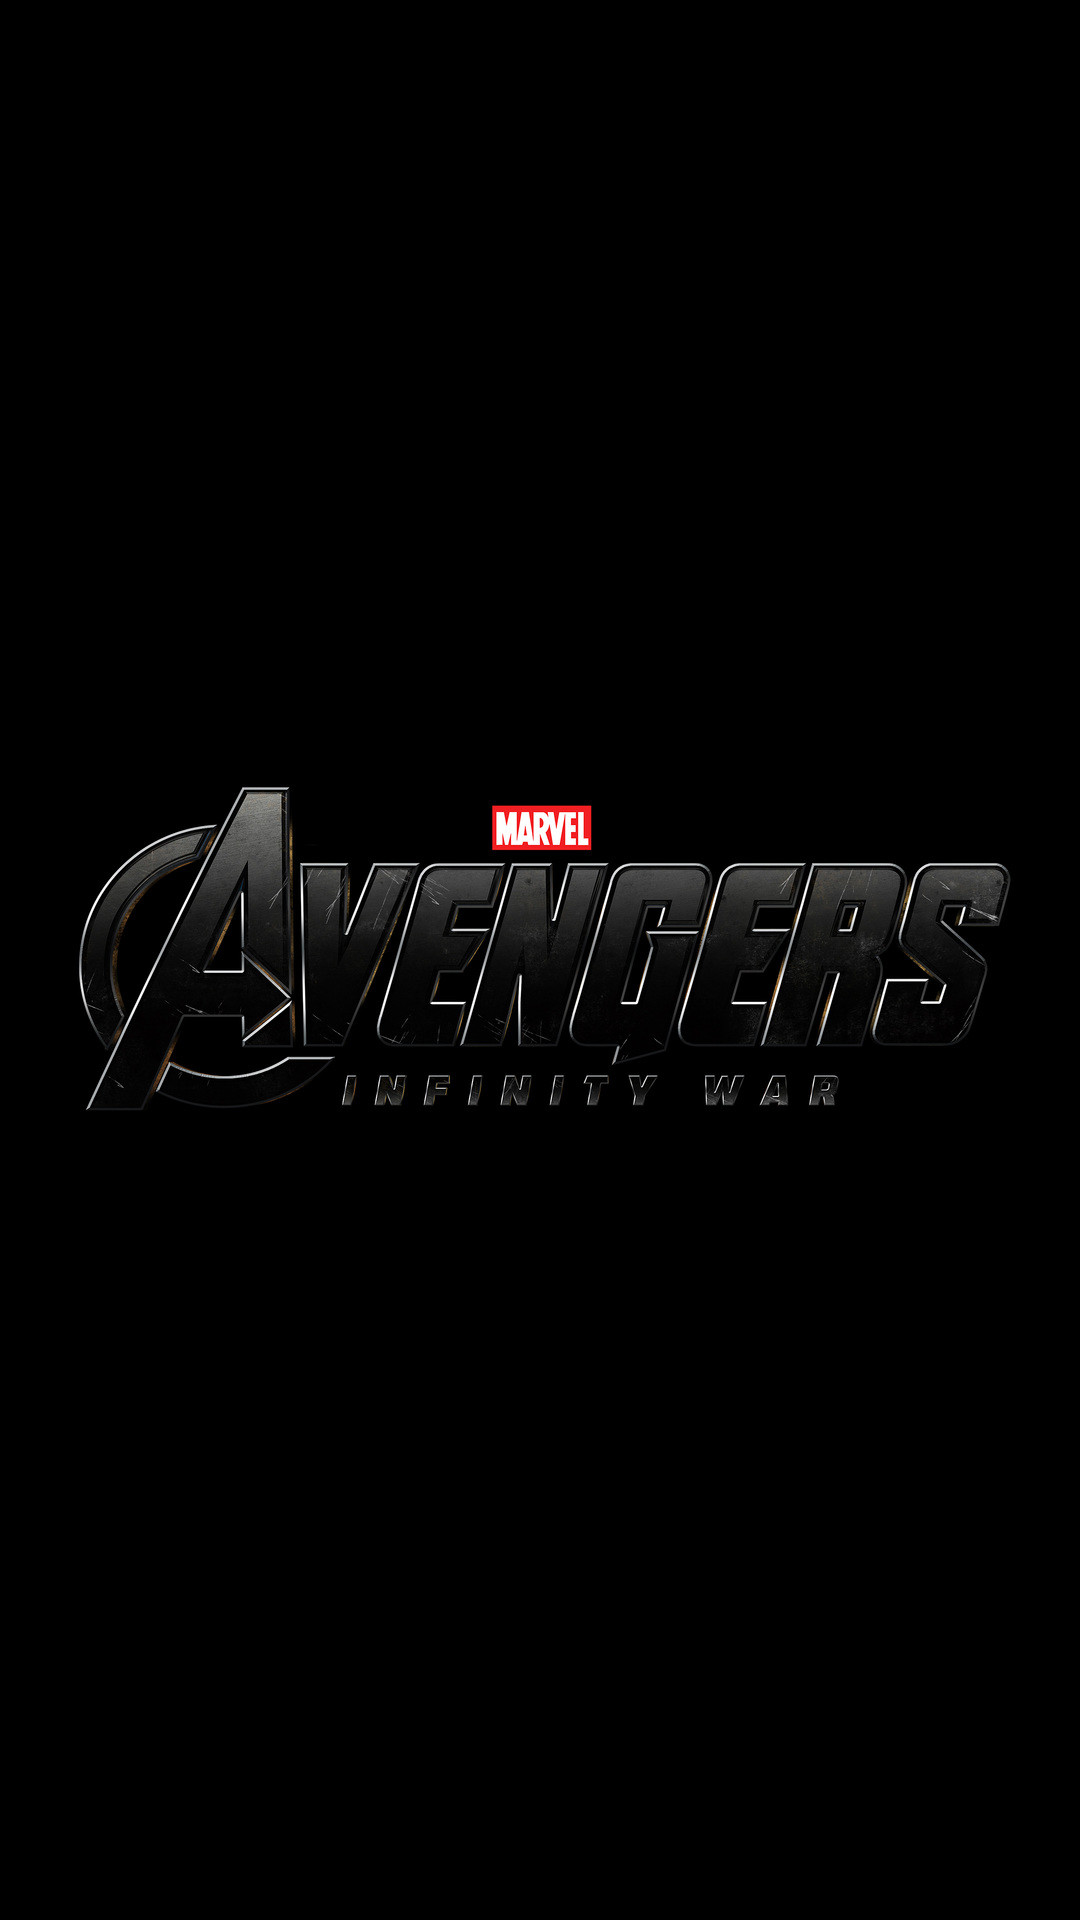 1080x1920 Avengers Infinity War 2018 Logo (Iphone 7,6s,6 Plus, Pixel xl ,One Plus  3,3t,5)